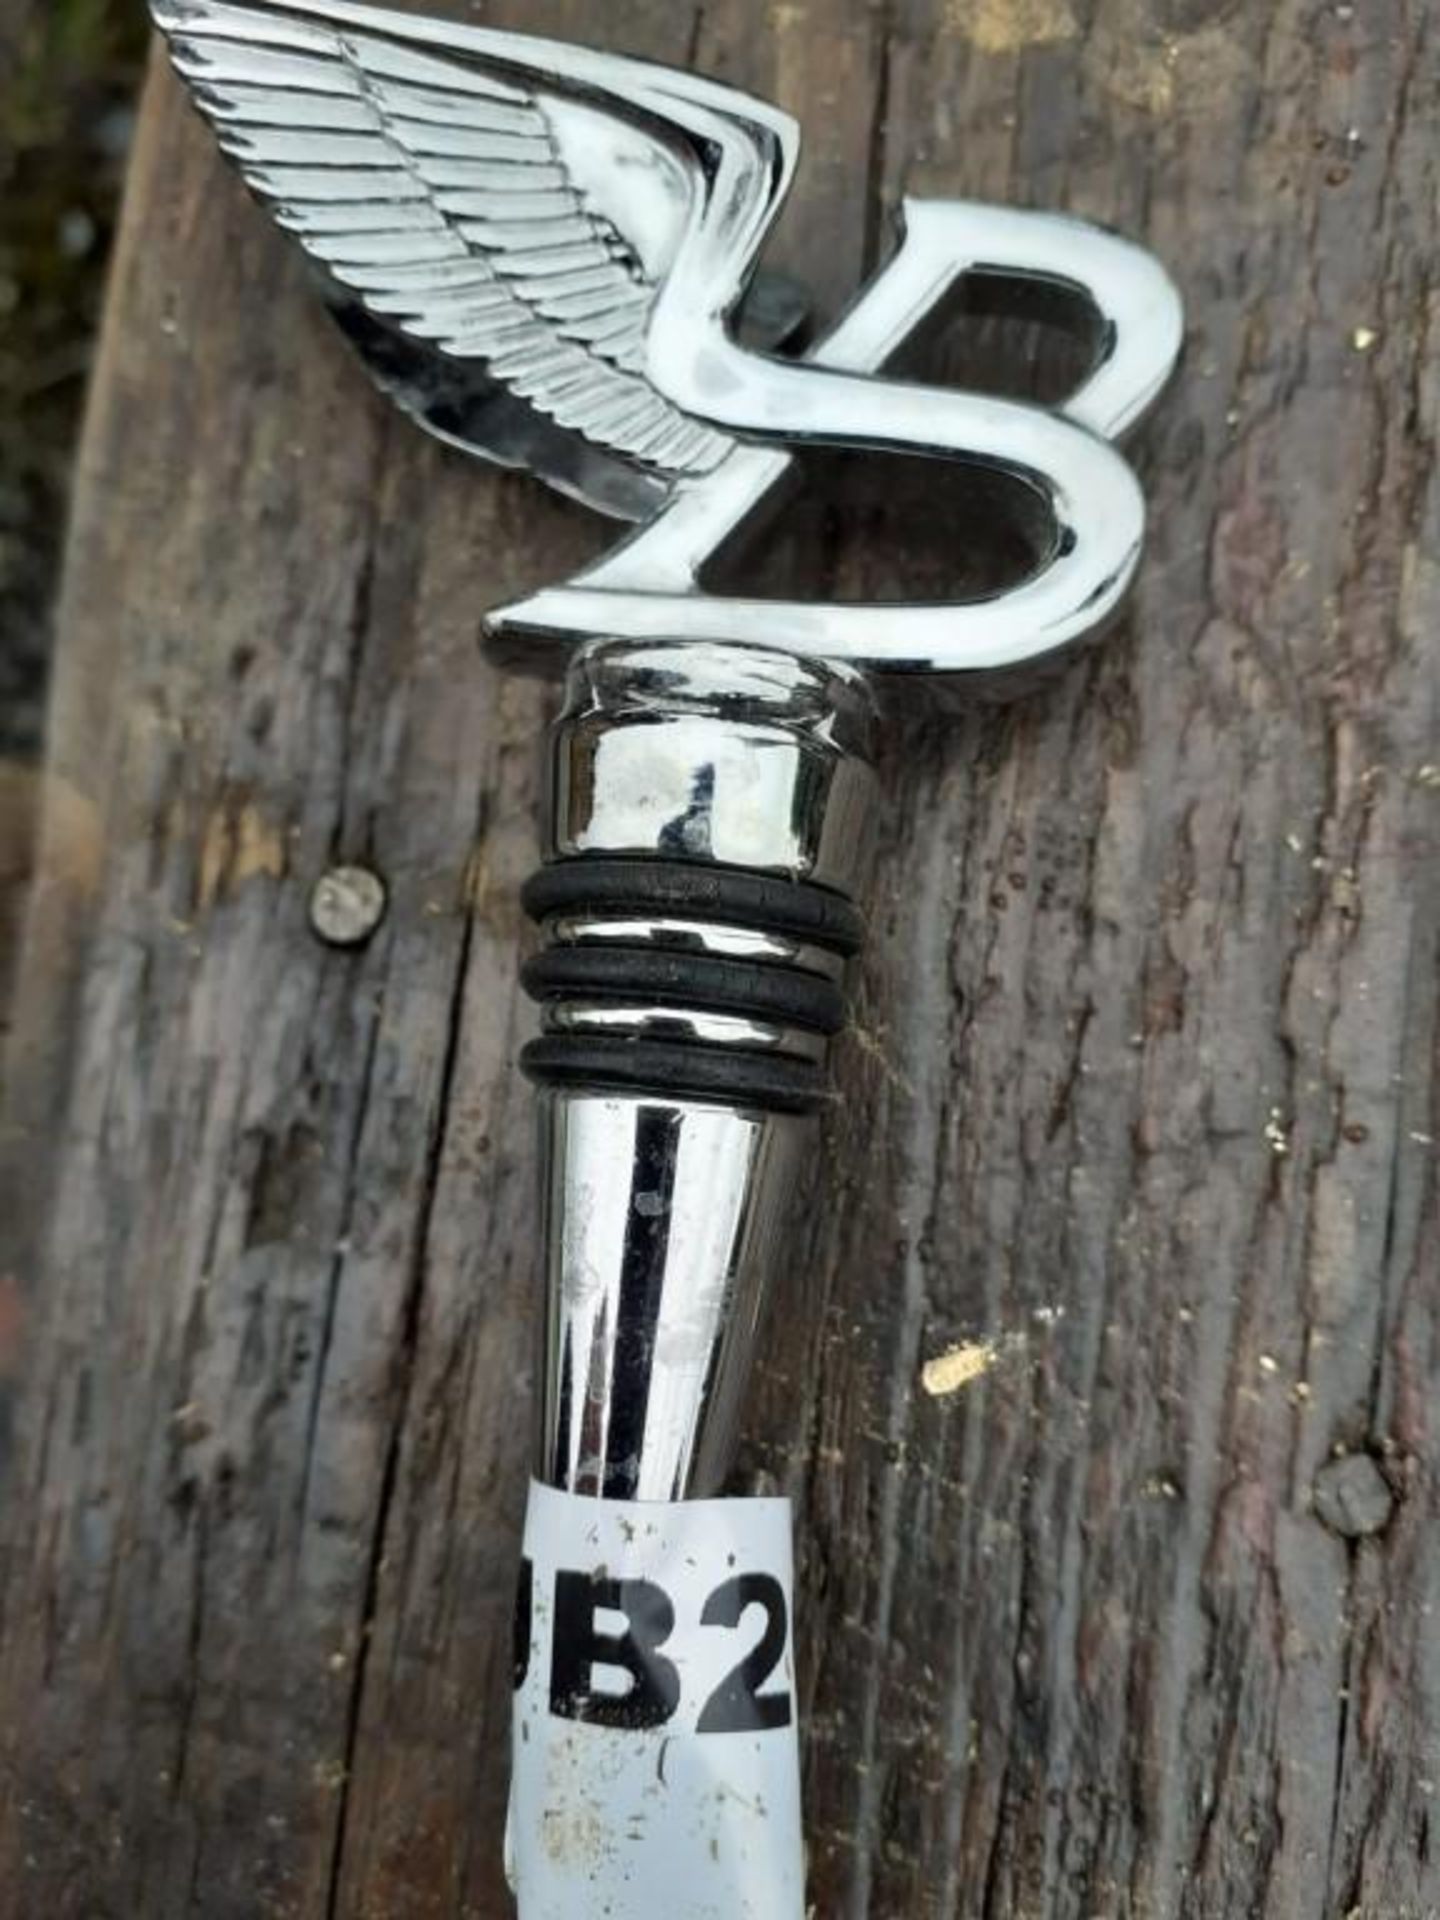 1 x Bentley-Inspired Flying B Bottle Stopper - Ref: JB206 - Pre-Owned - NO VAT ON THE HAMMER - CL574 - Image 2 of 2